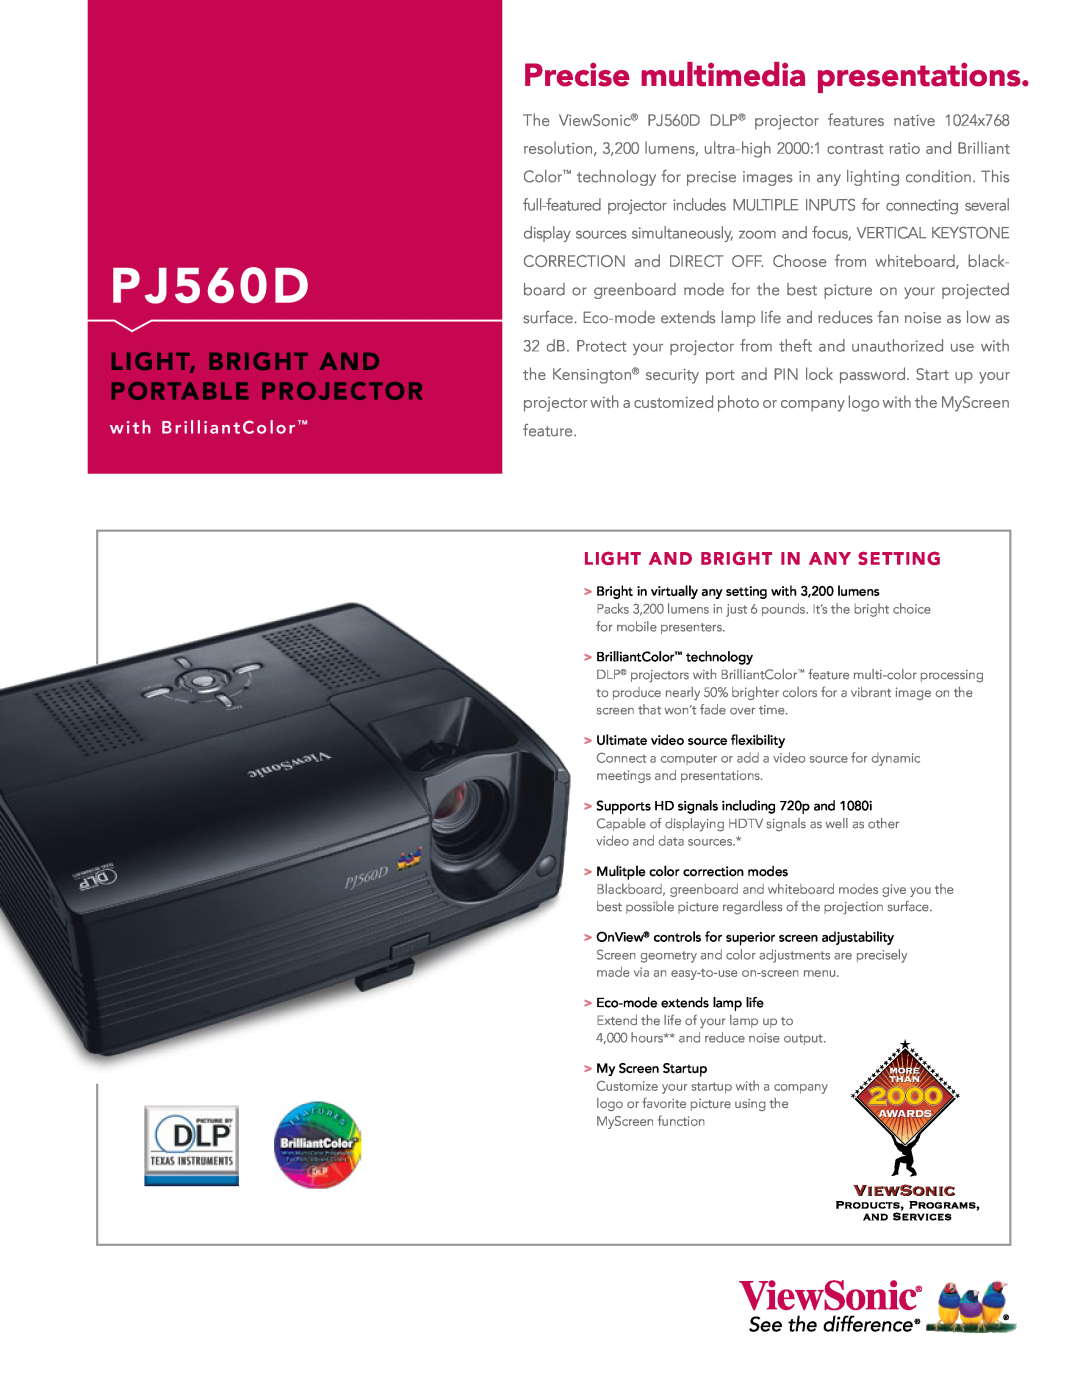 ViewSonic PJ560D manual Precise multimedia presentations, Light, Bright And Portable Projector, with BrilliantColor 